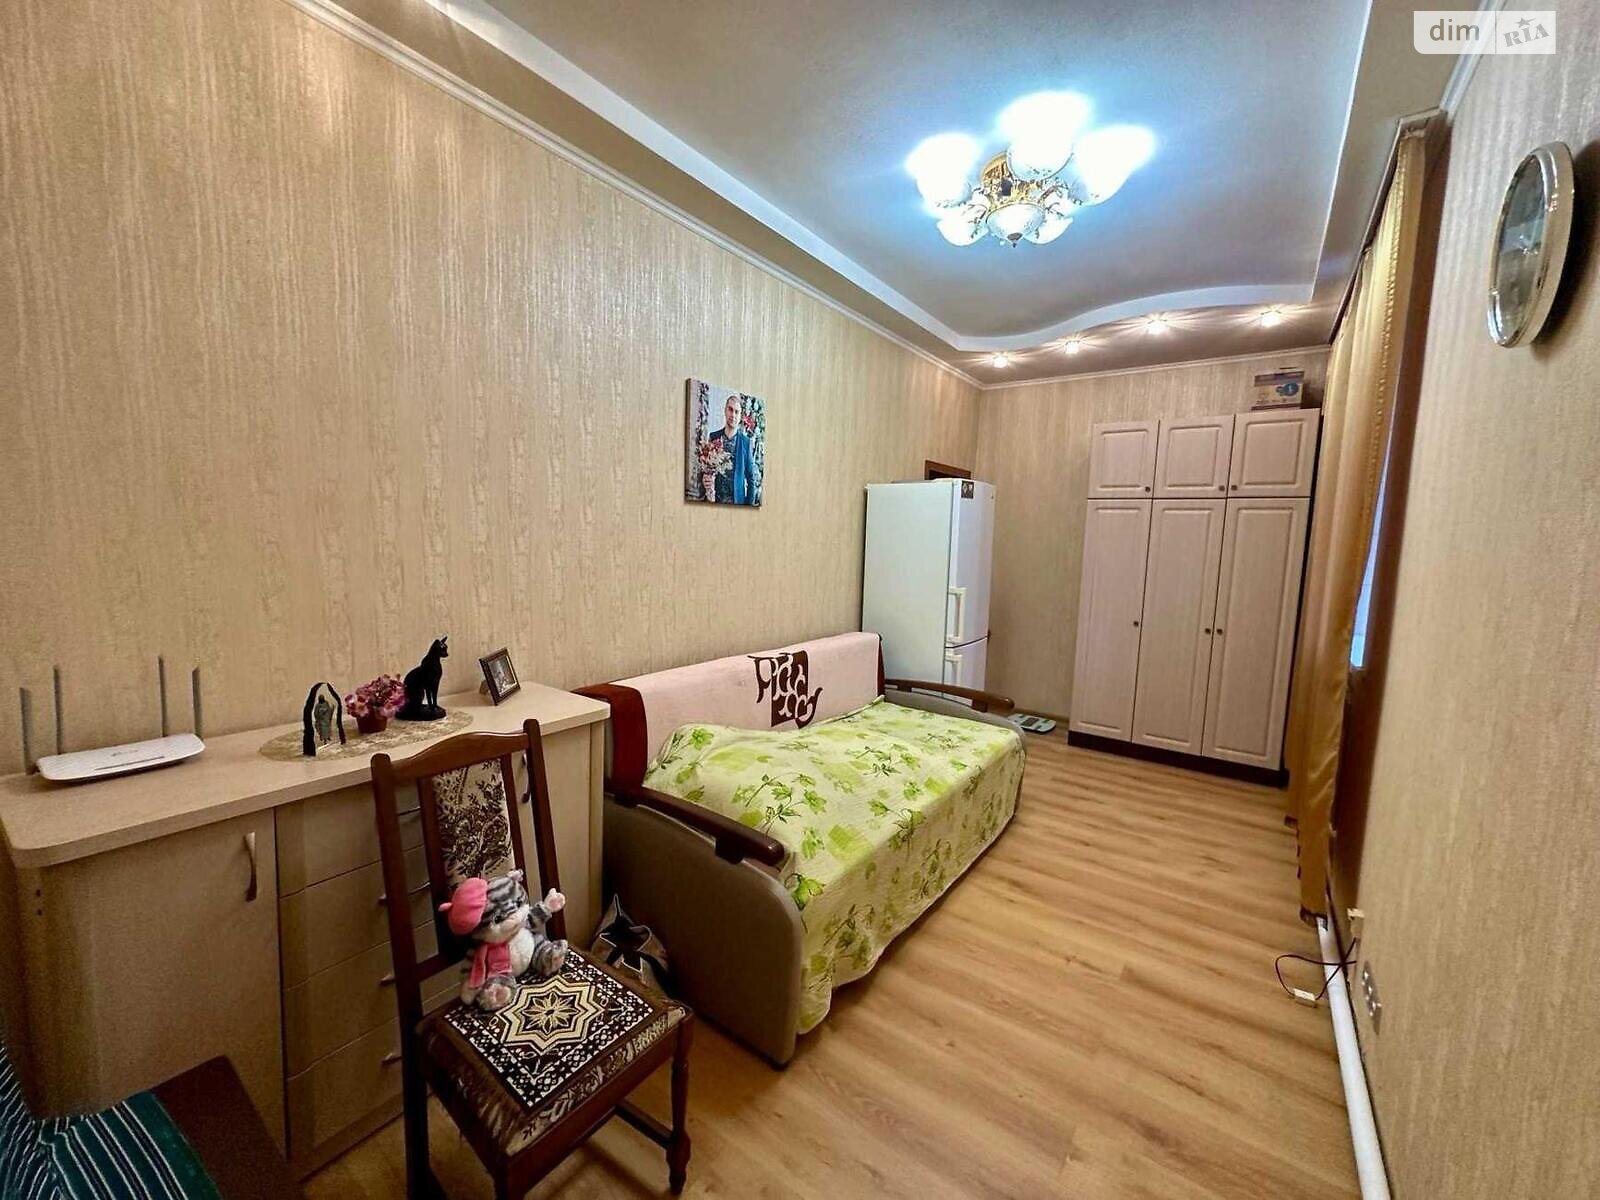 Продажа трехкомнатной квартиры в Харькове, на ул. Докучаева 2, район Залютино фото 1